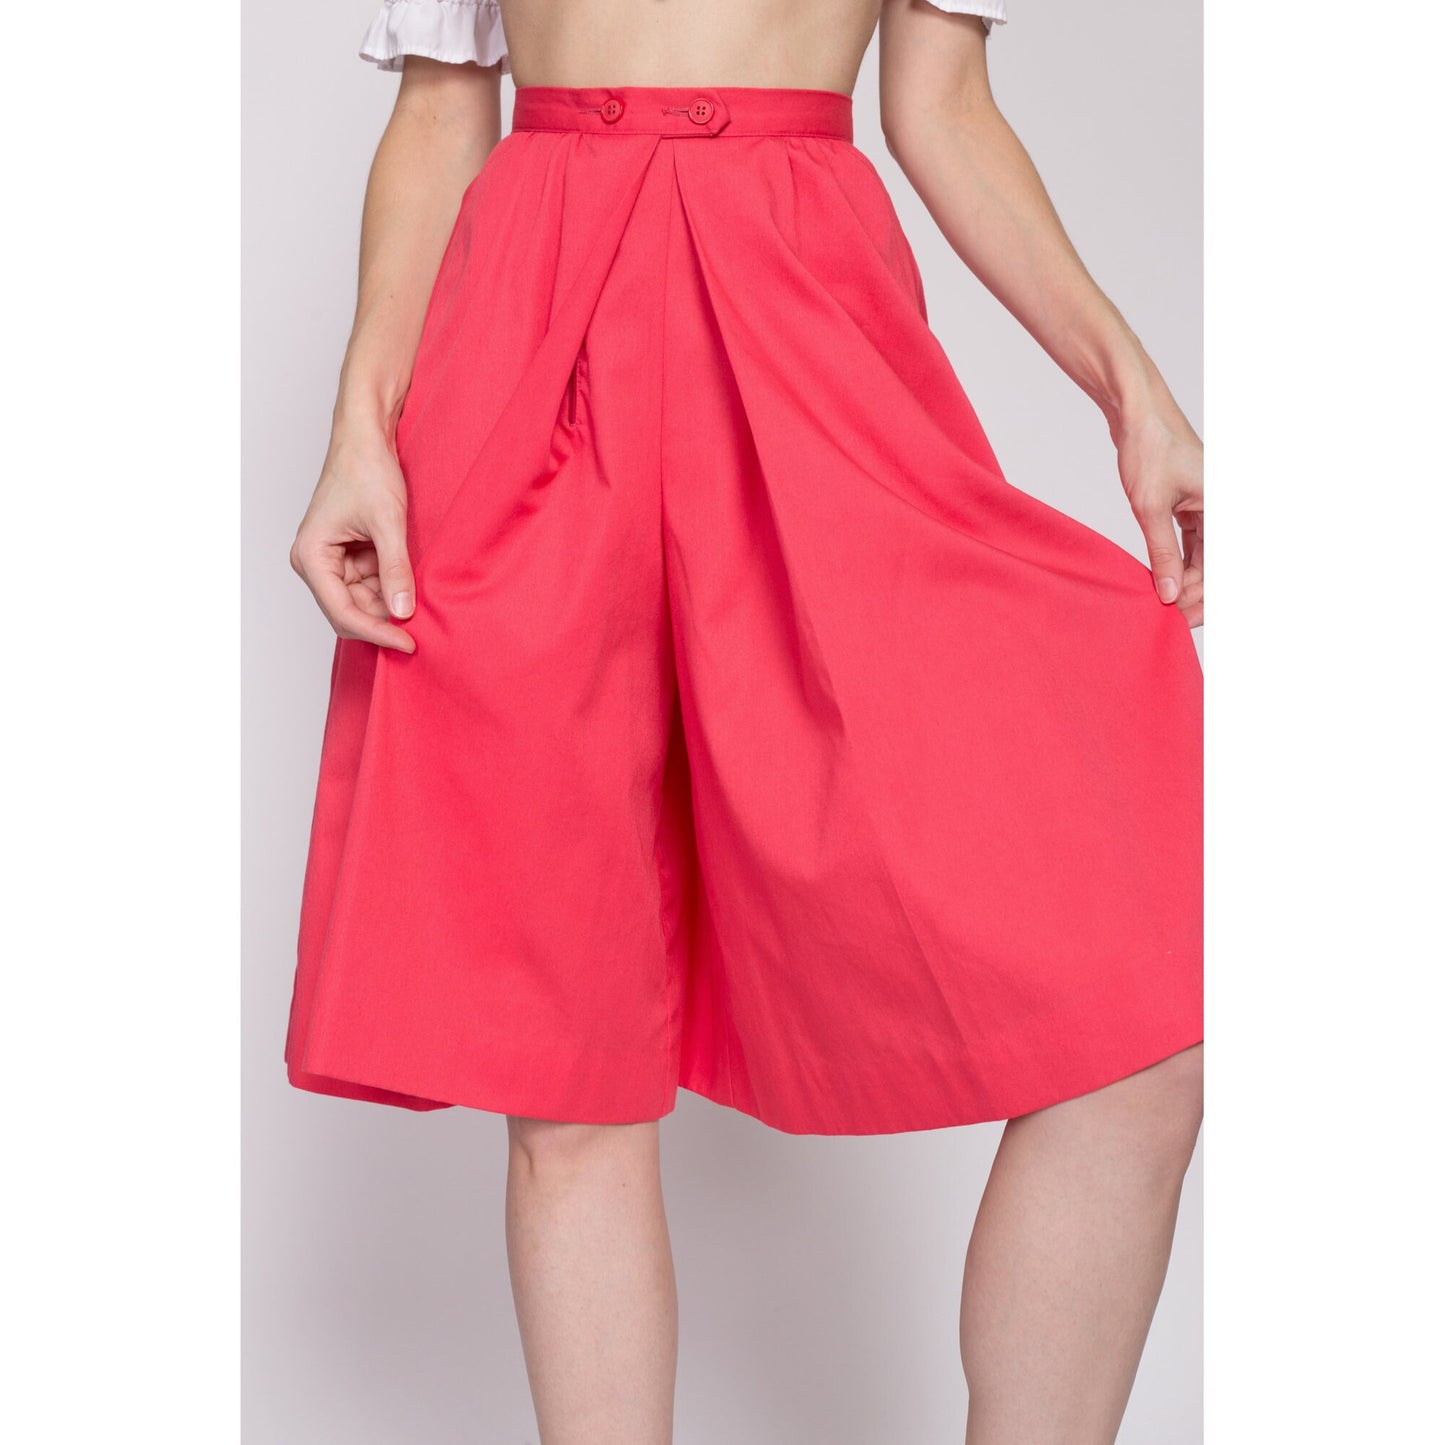 XS| 70s Salmon Pink High Waisted Culotte Skort - Extra Small, 23.5" | Retro Vintage Pantskirt Long Shorts